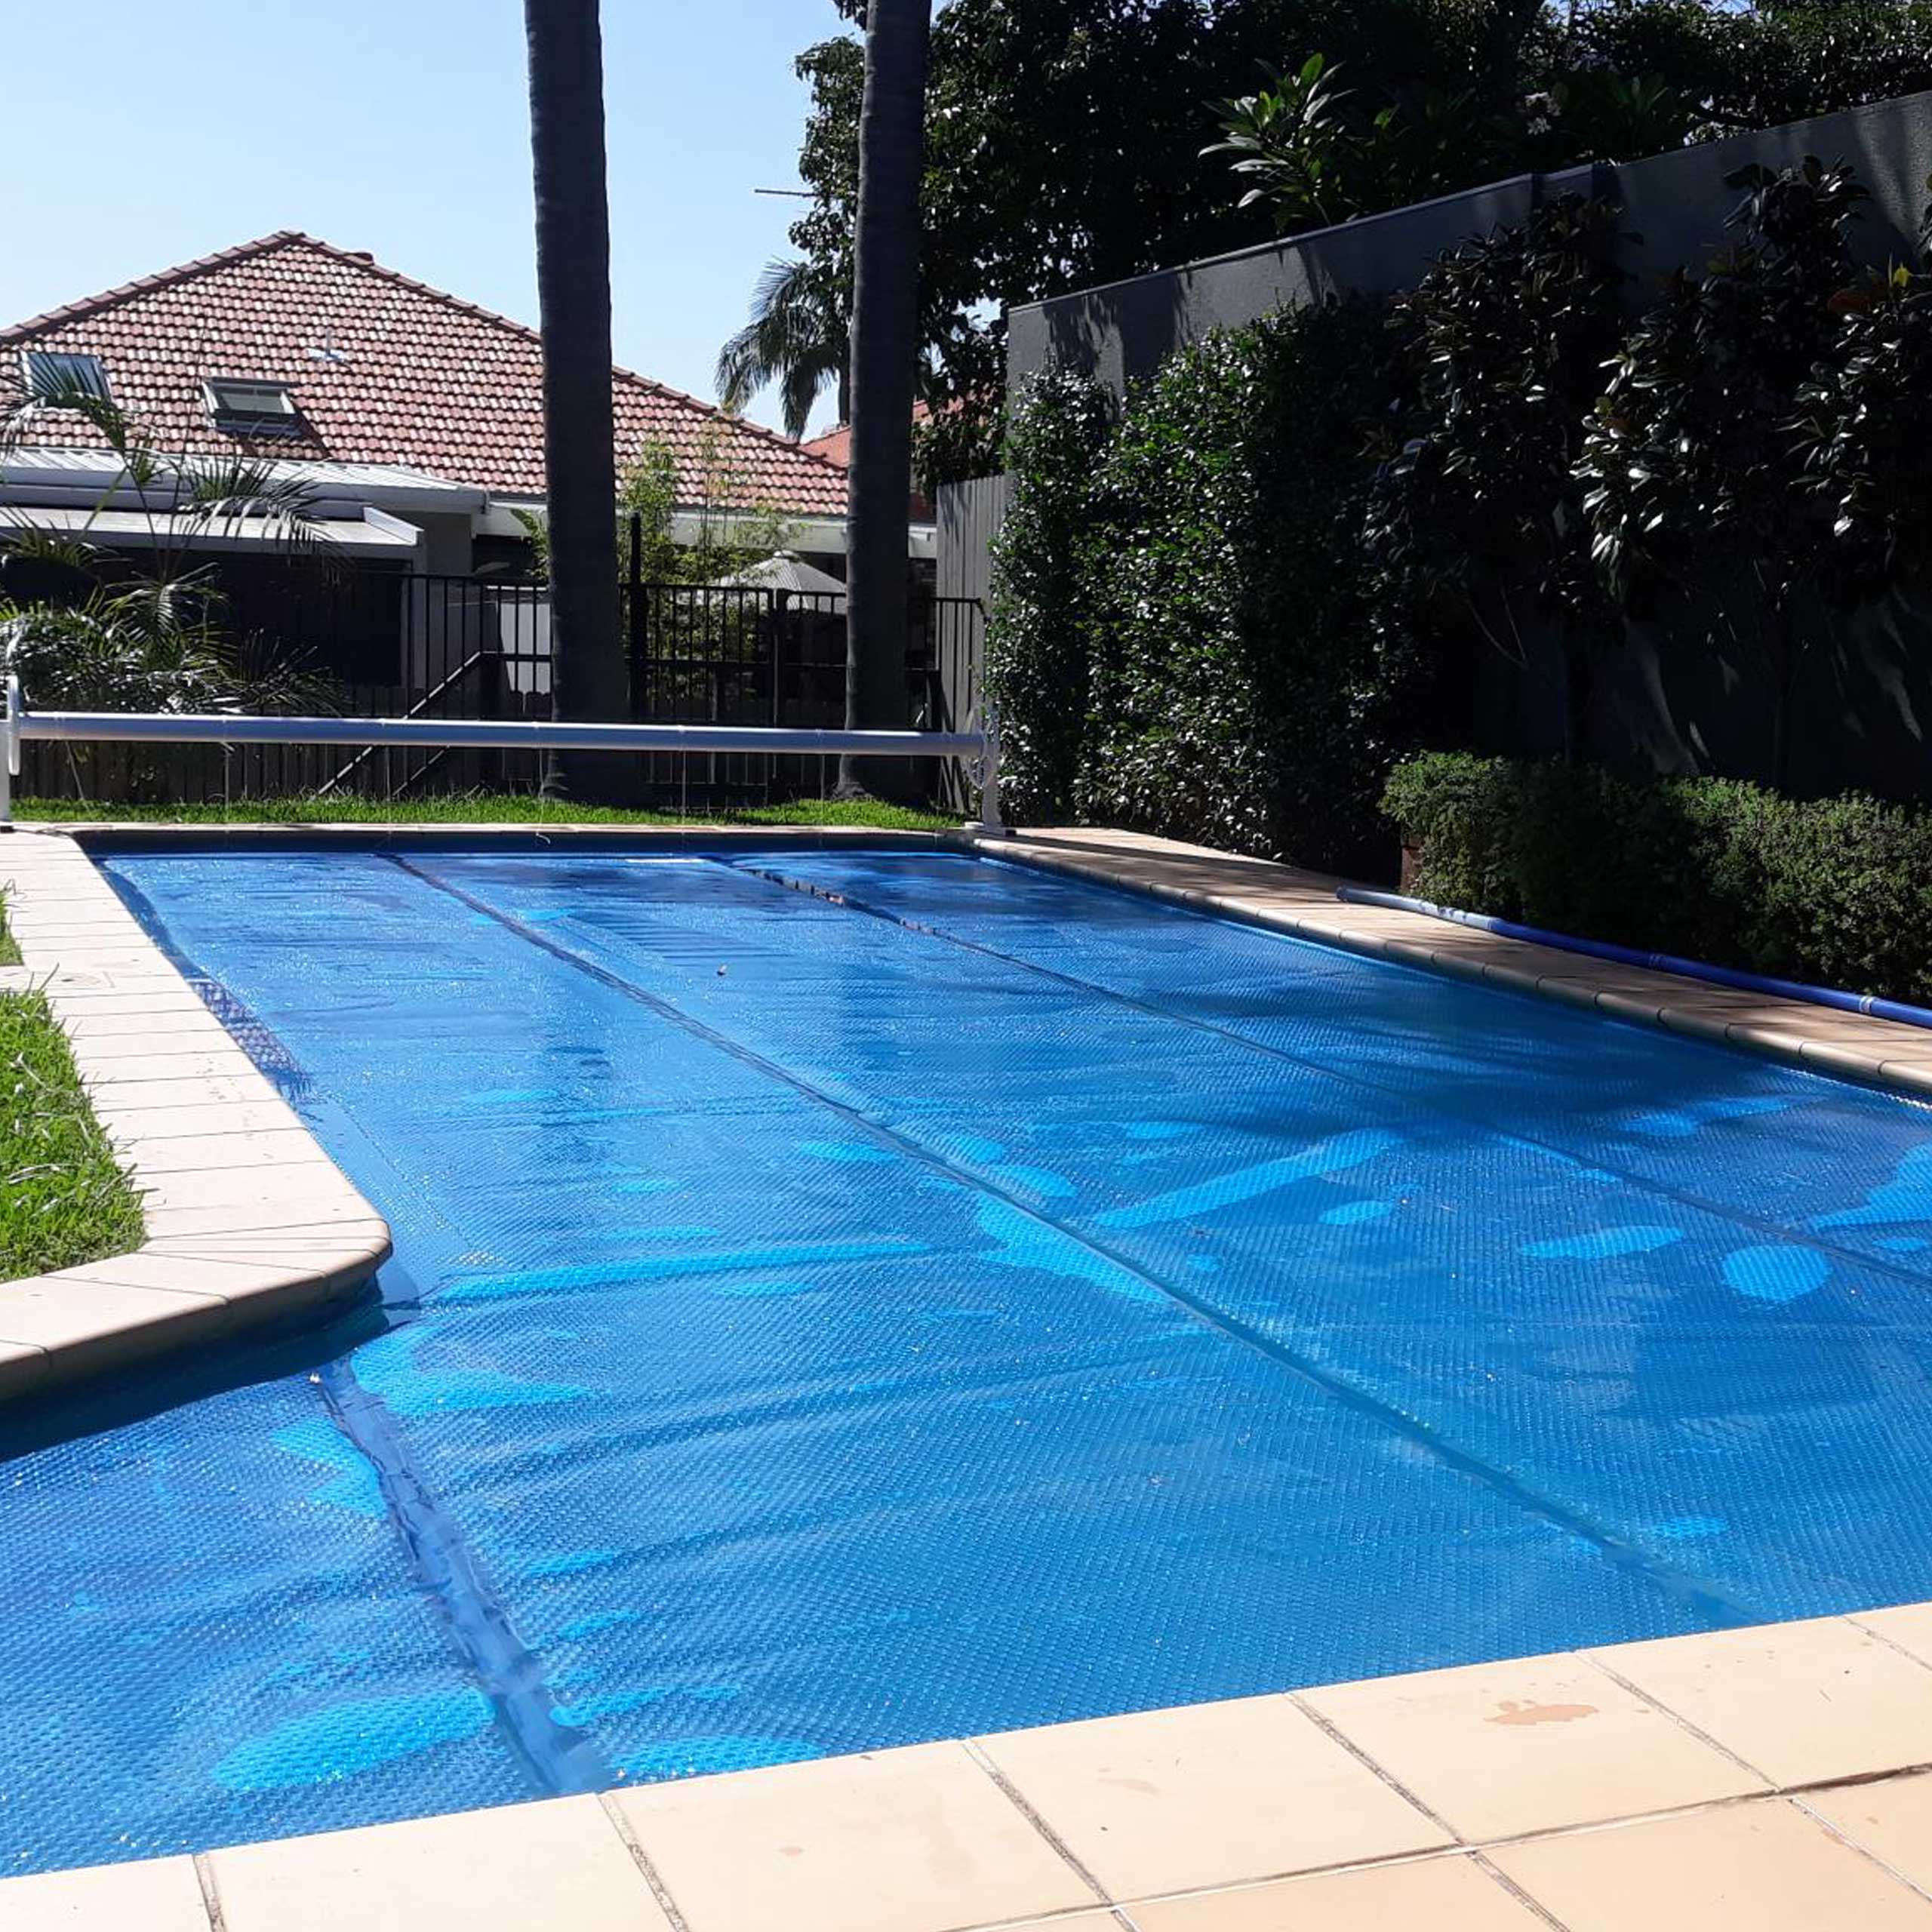 525B Blue Solar Pool Cover